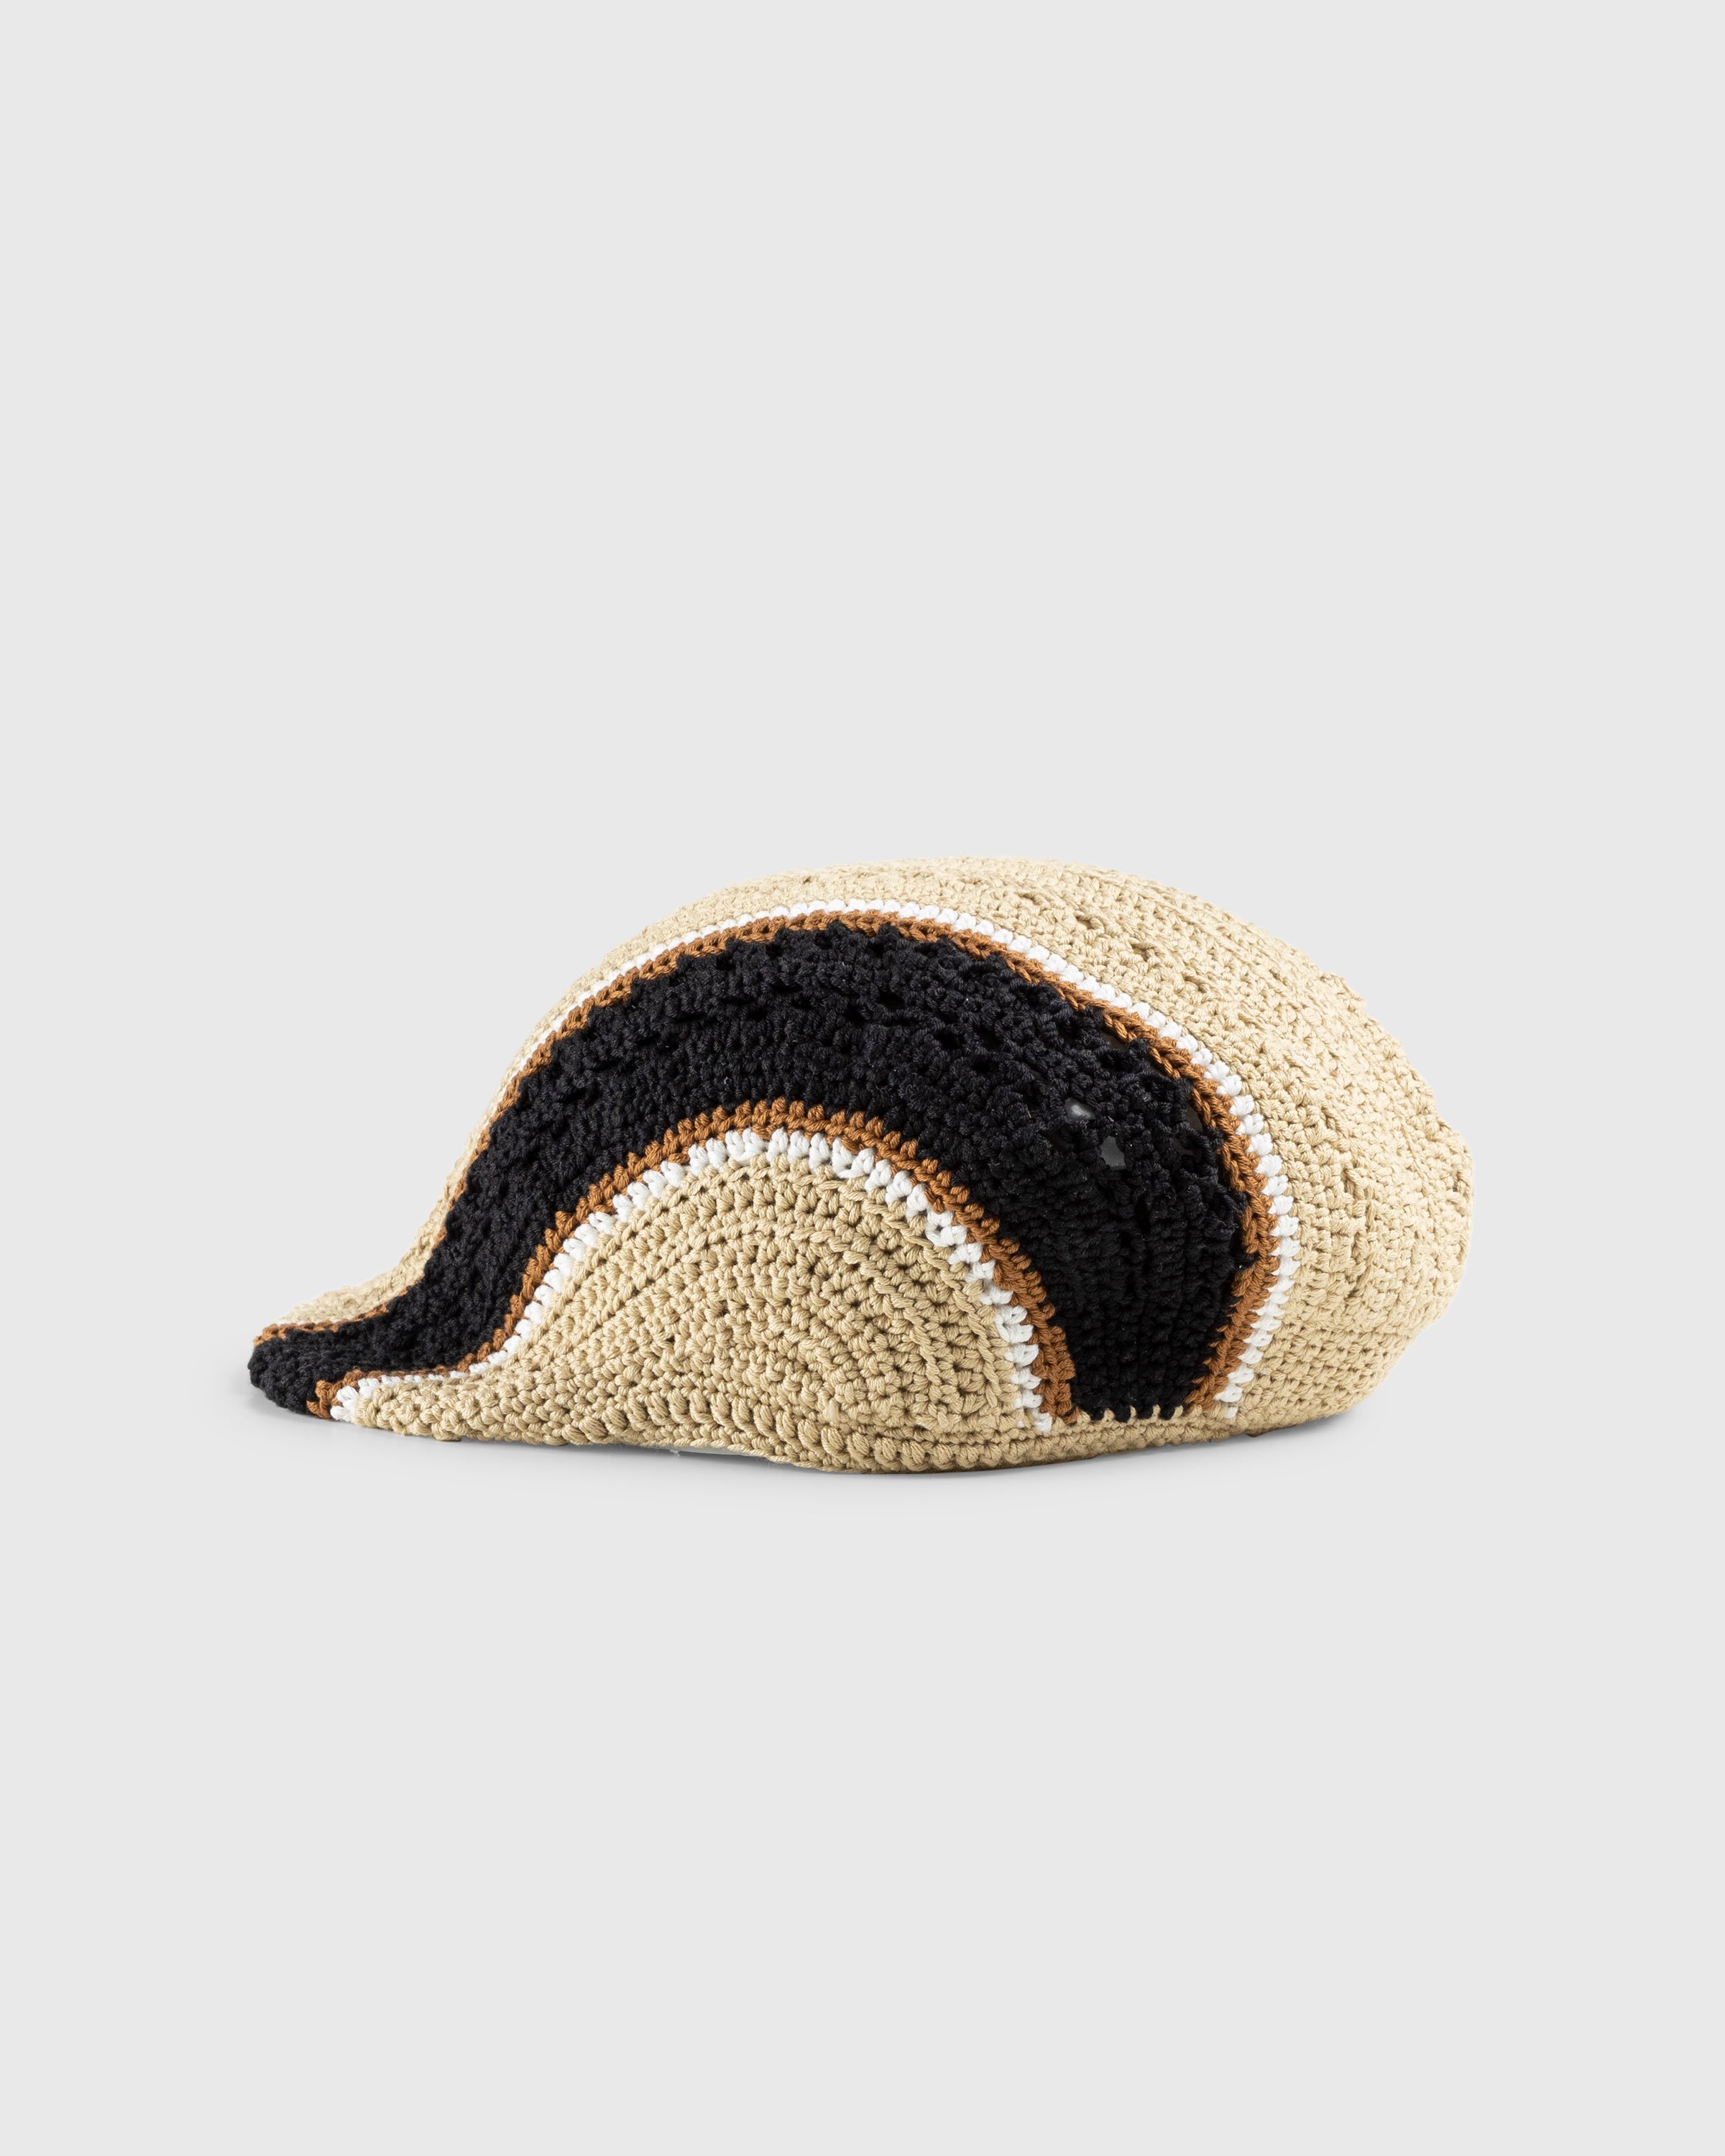 SSU - Crochet Flat Hat Beige/Black - Accessories - Black - Image 3